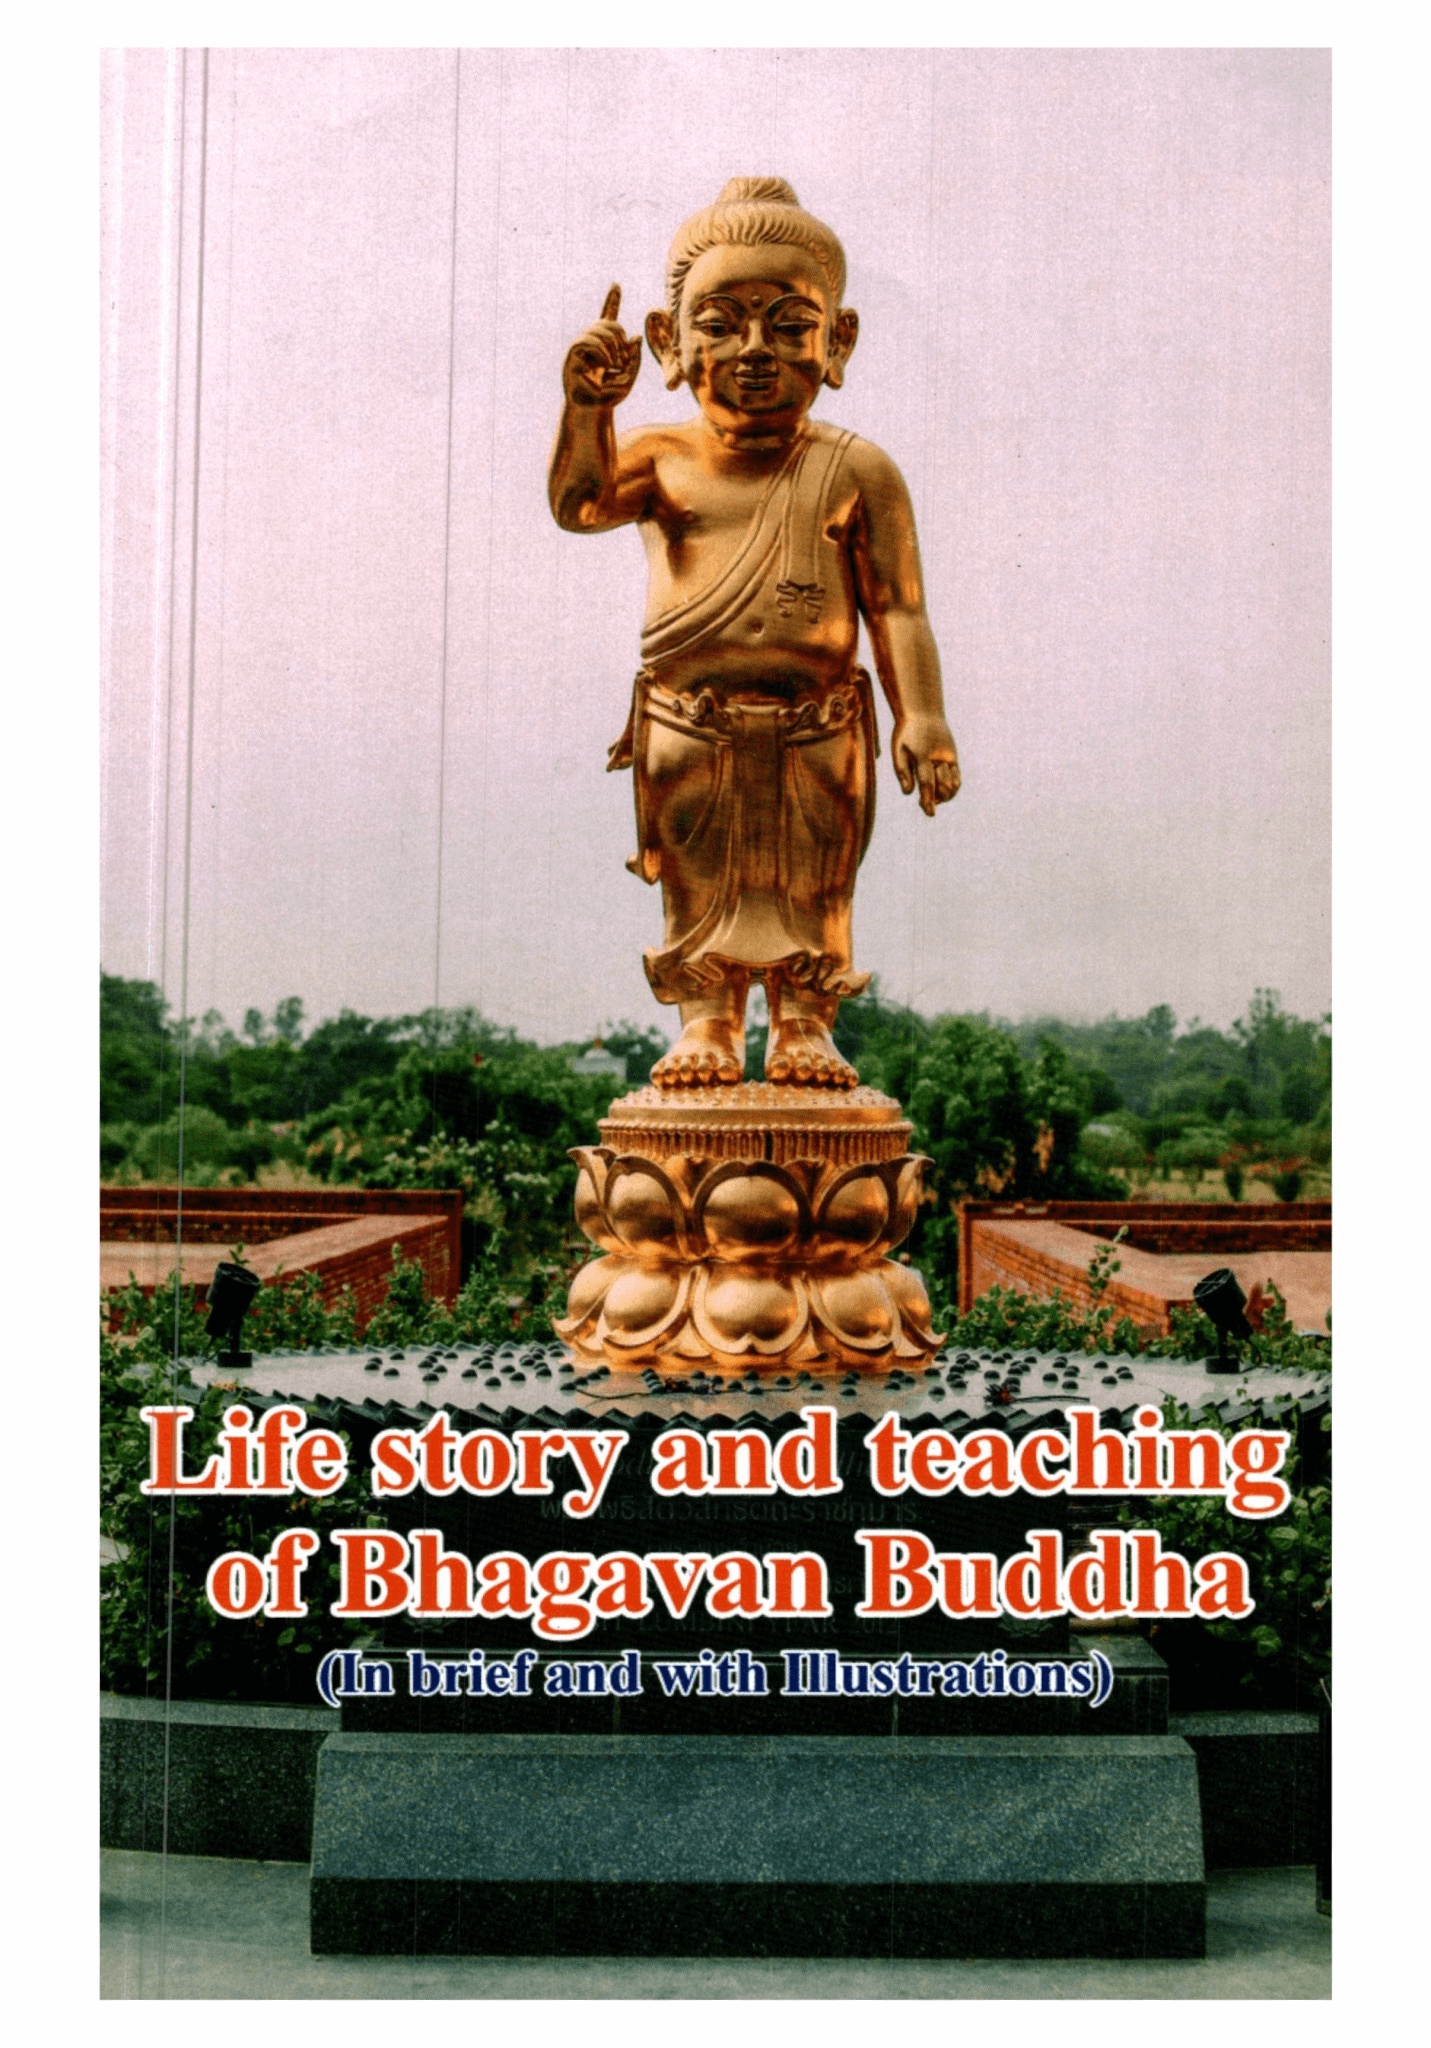 Life story and Teachings of Bhagavan Buddha